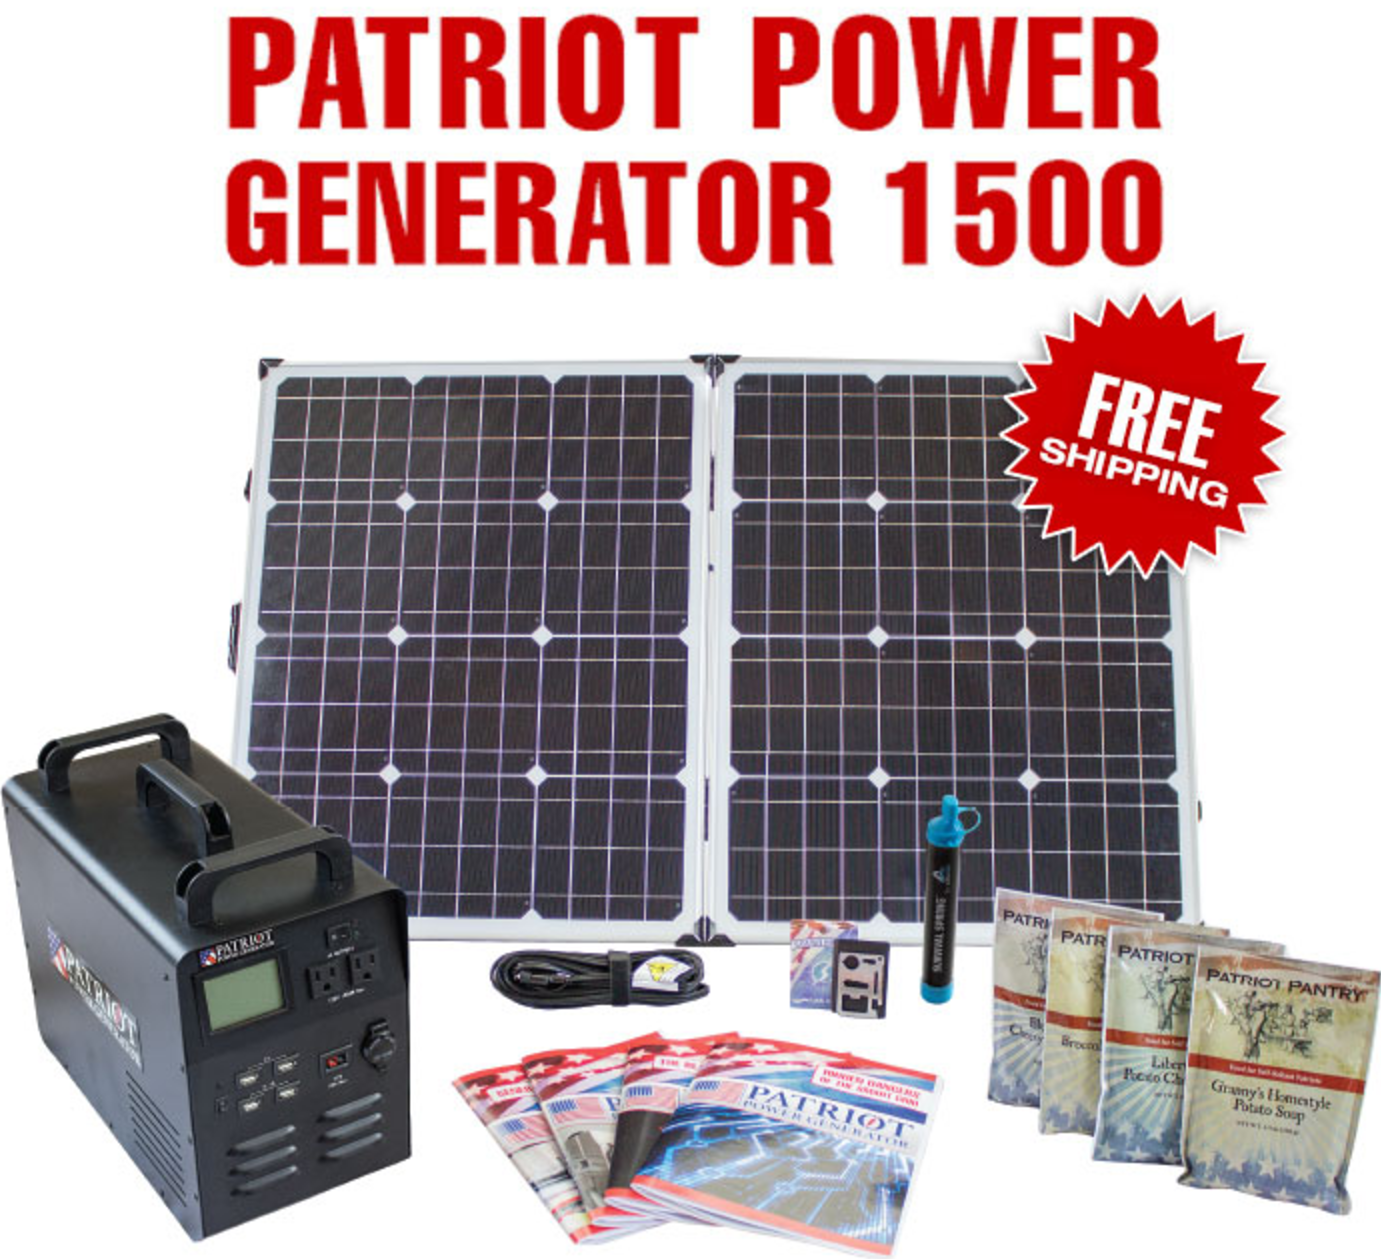 Official Patriot Power Generator â Wise Patriot